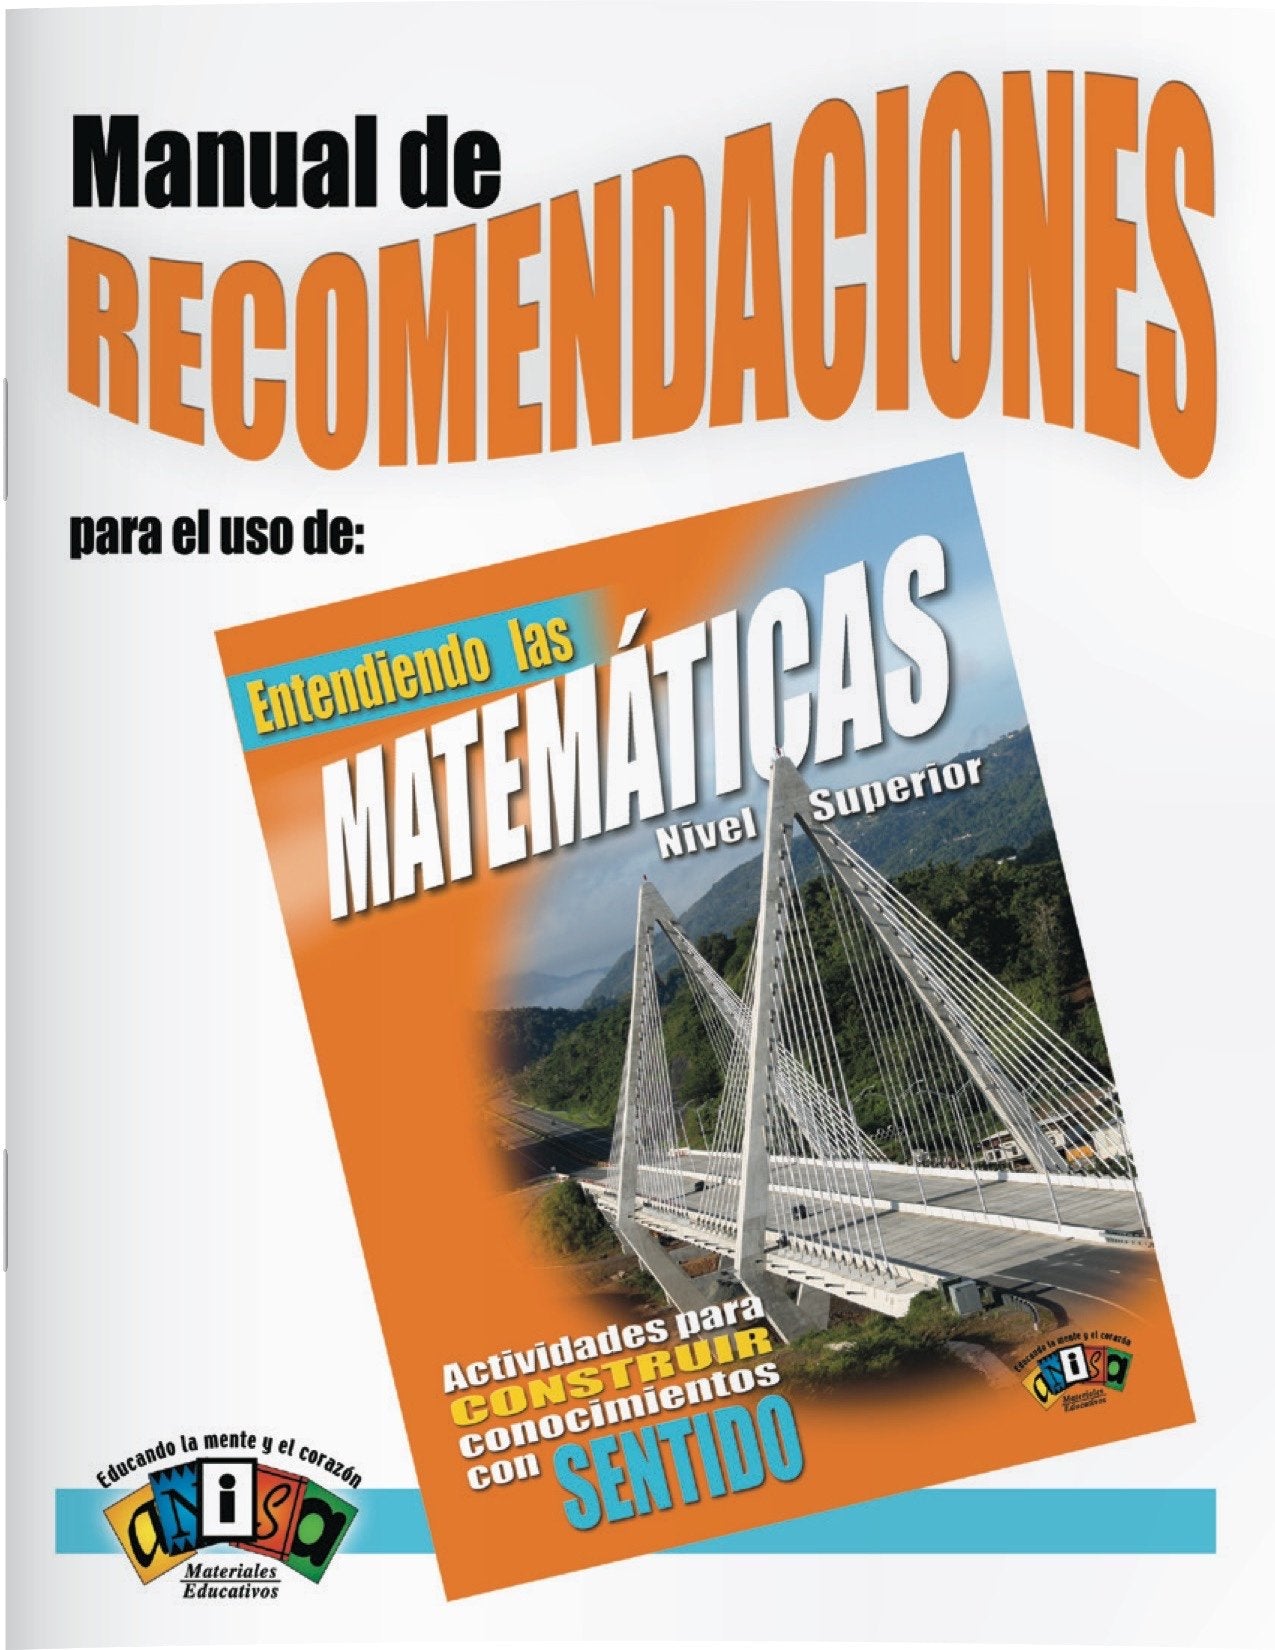 AM-L010 Entendiendo las matemáticas - Nivel Superior (Manual d